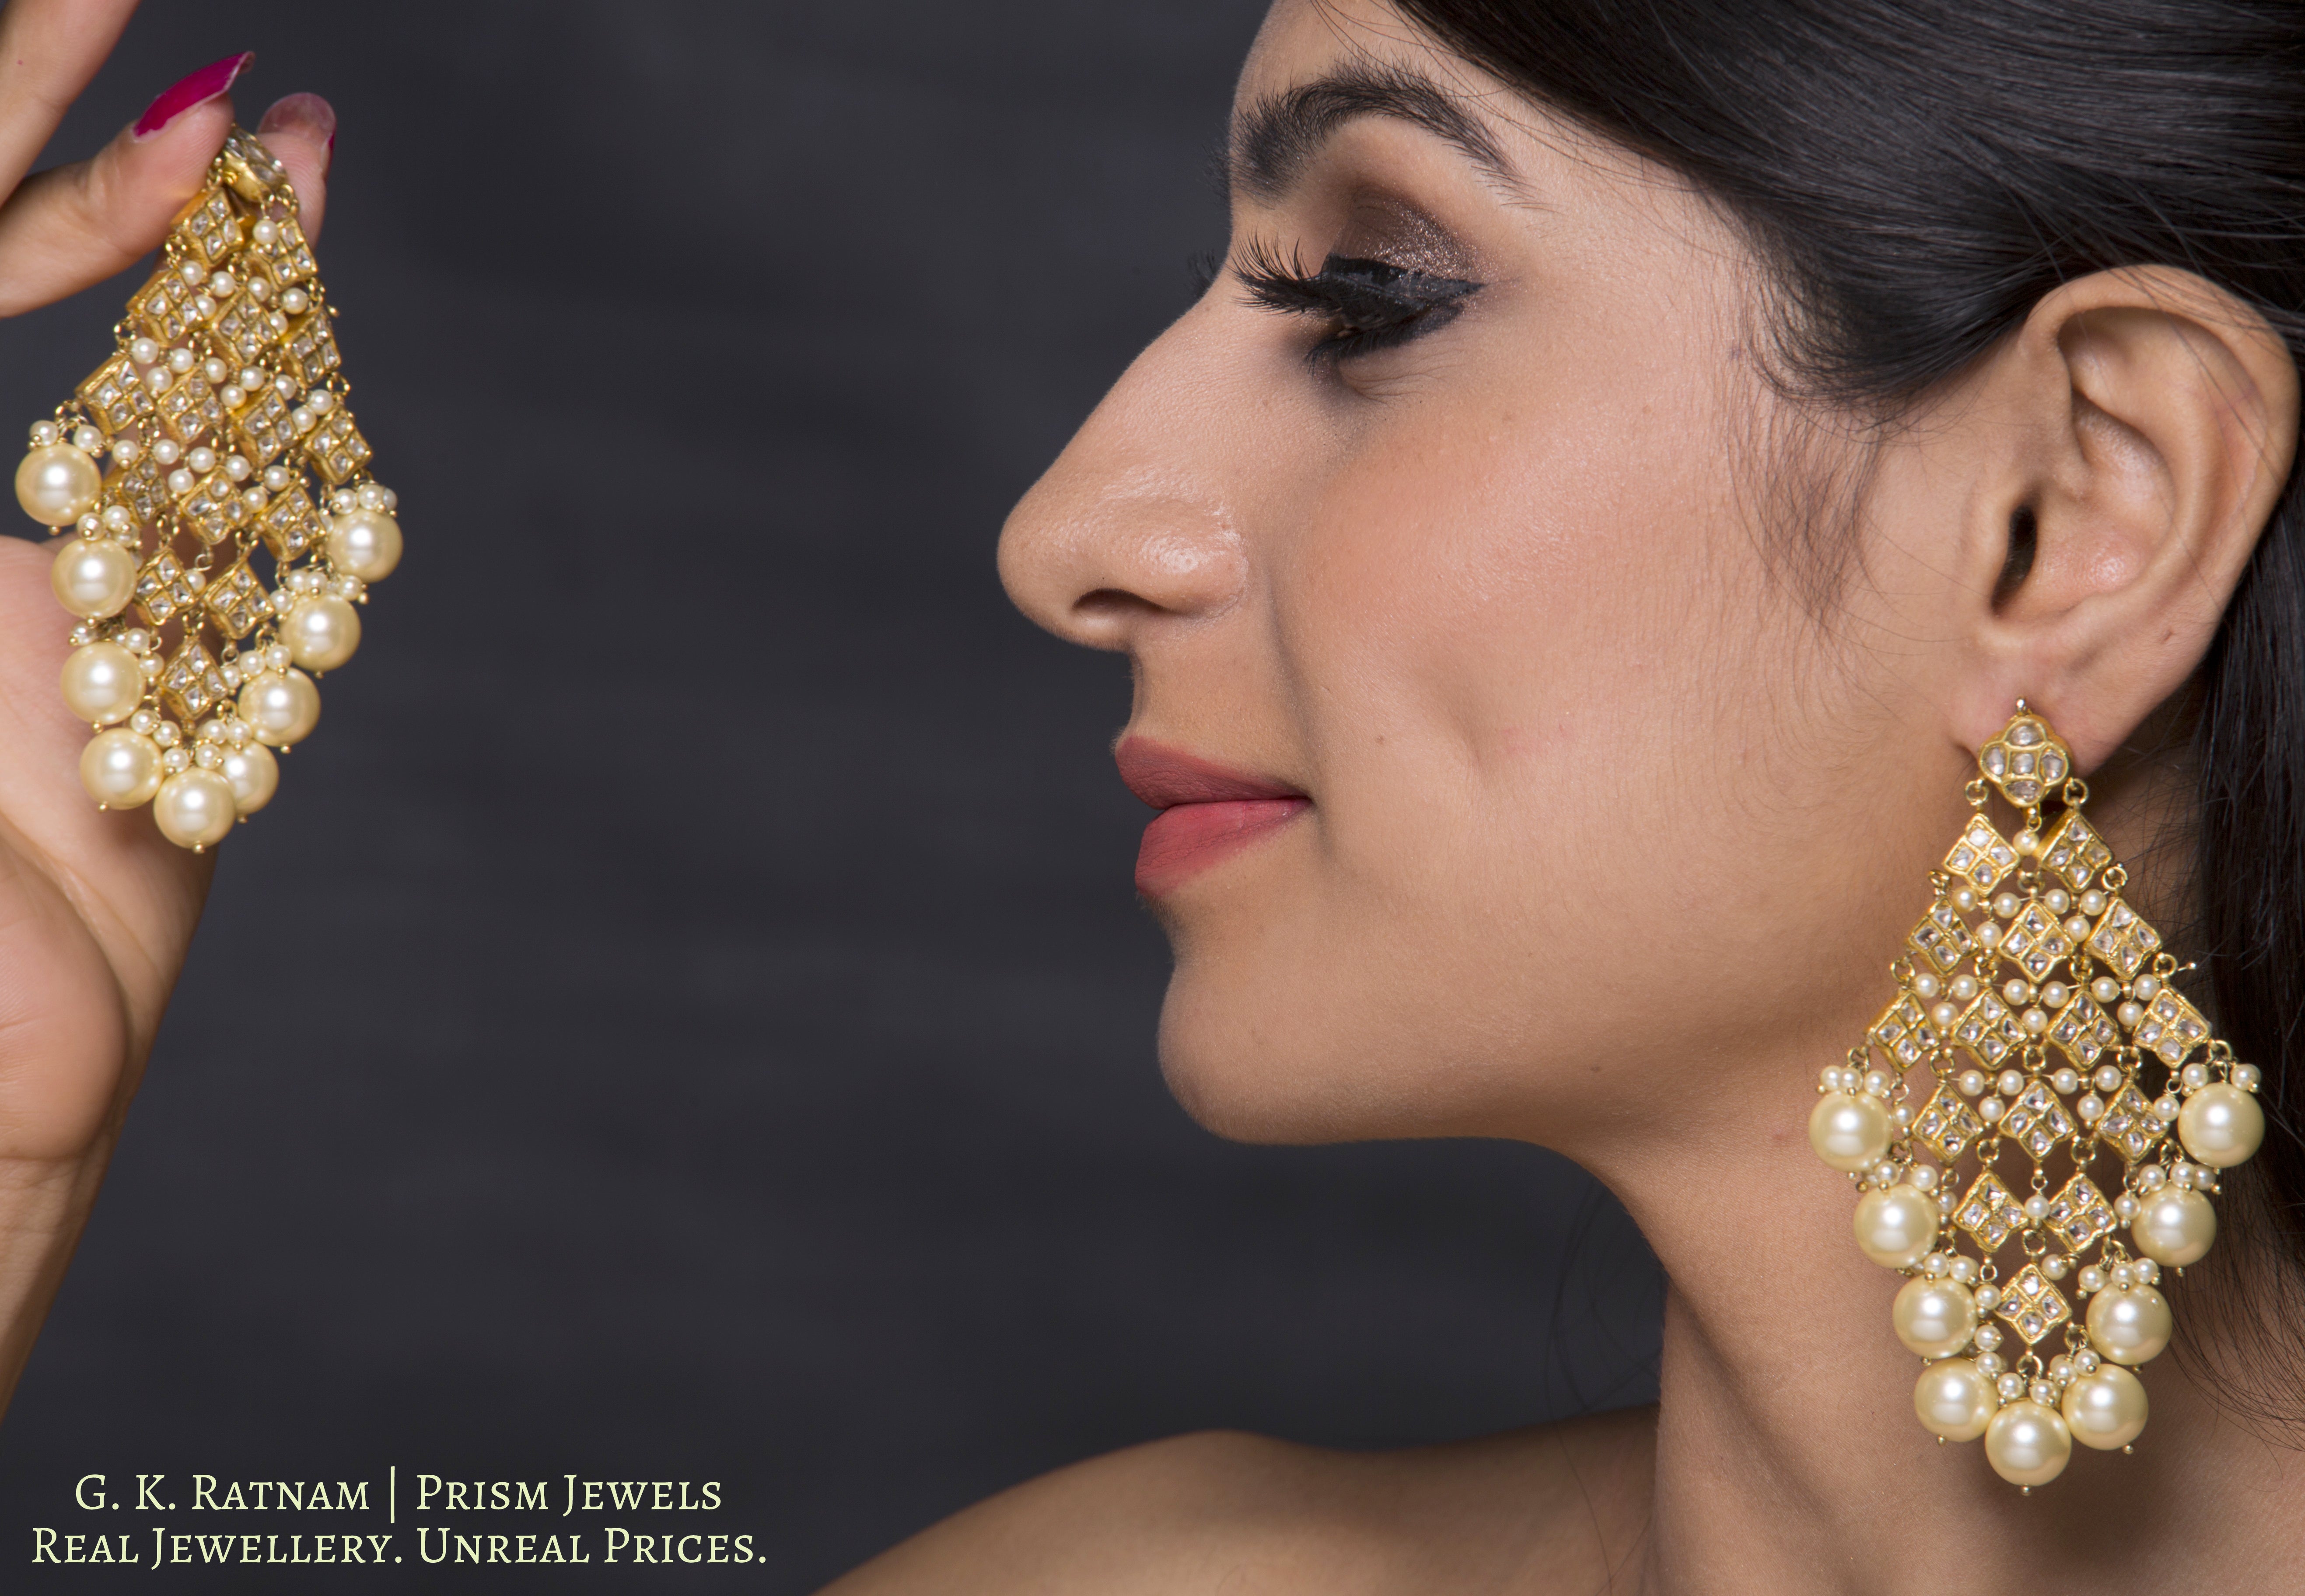 23k Gold and Diamond Polki kite-shaped Chandelier Earring Pair with lustrous pearls - G. K. Ratnam